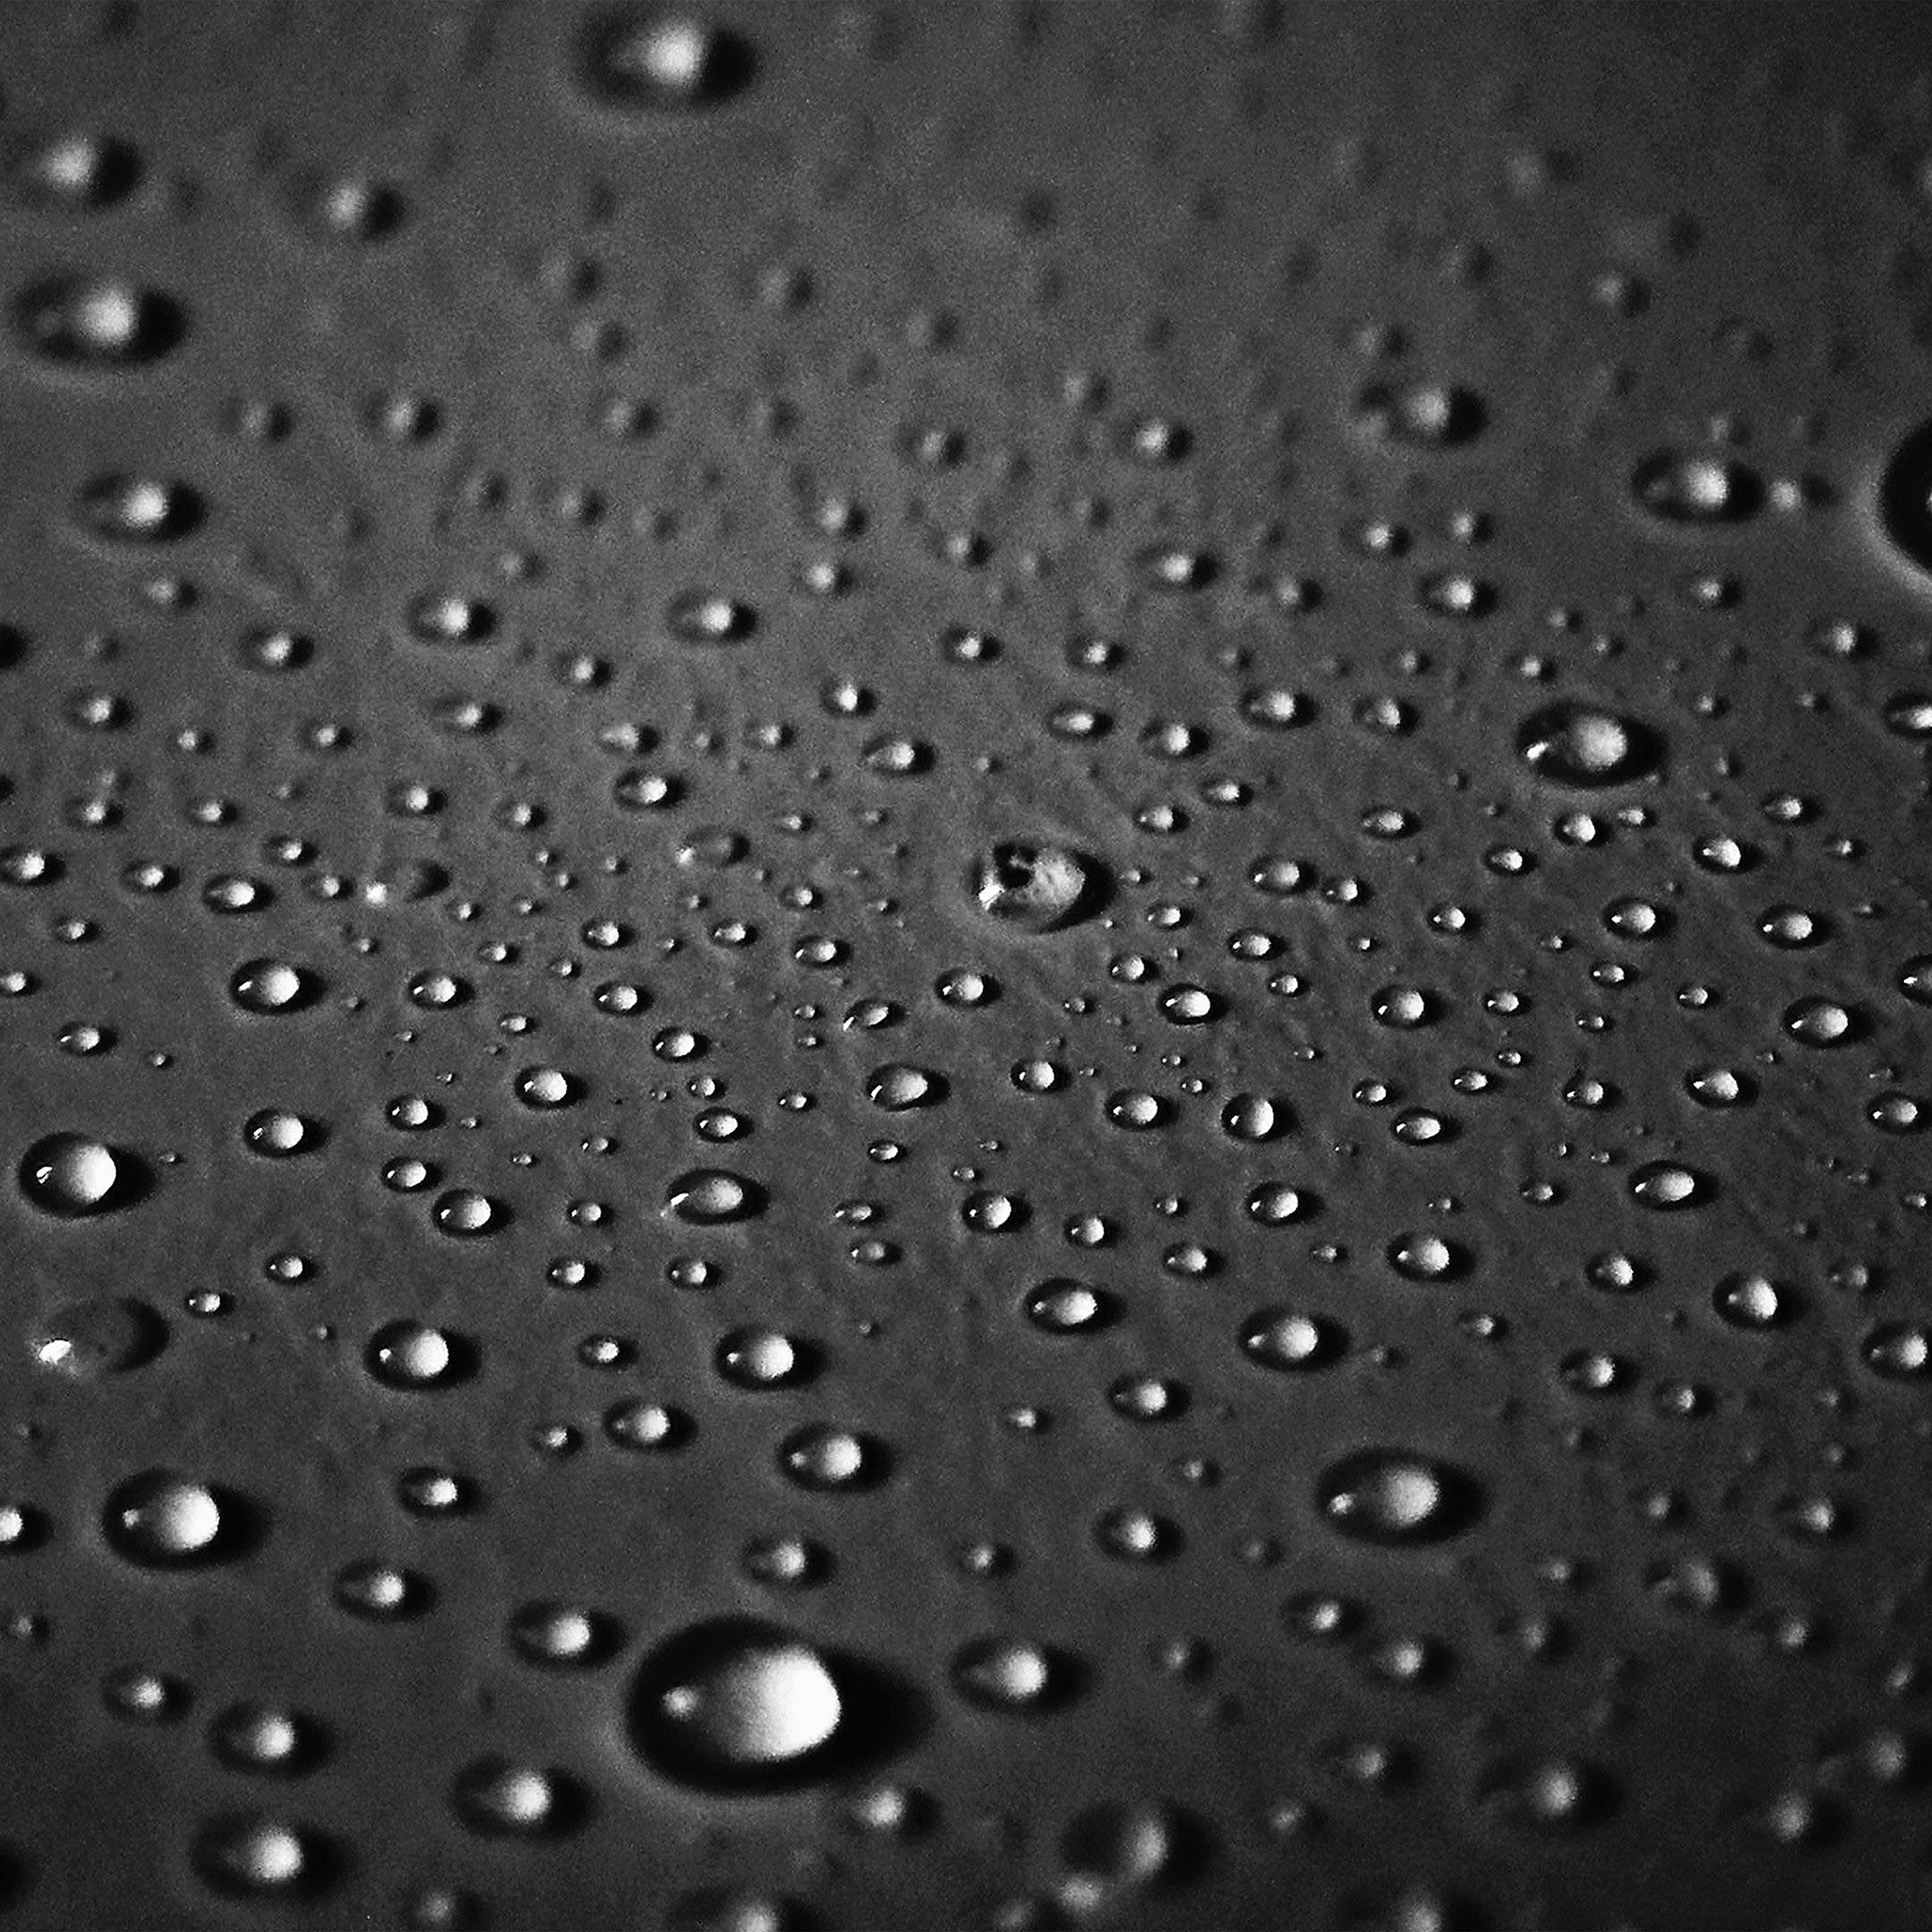 Iphone 8 Plus Background Waterdrops - HD Wallpaper 